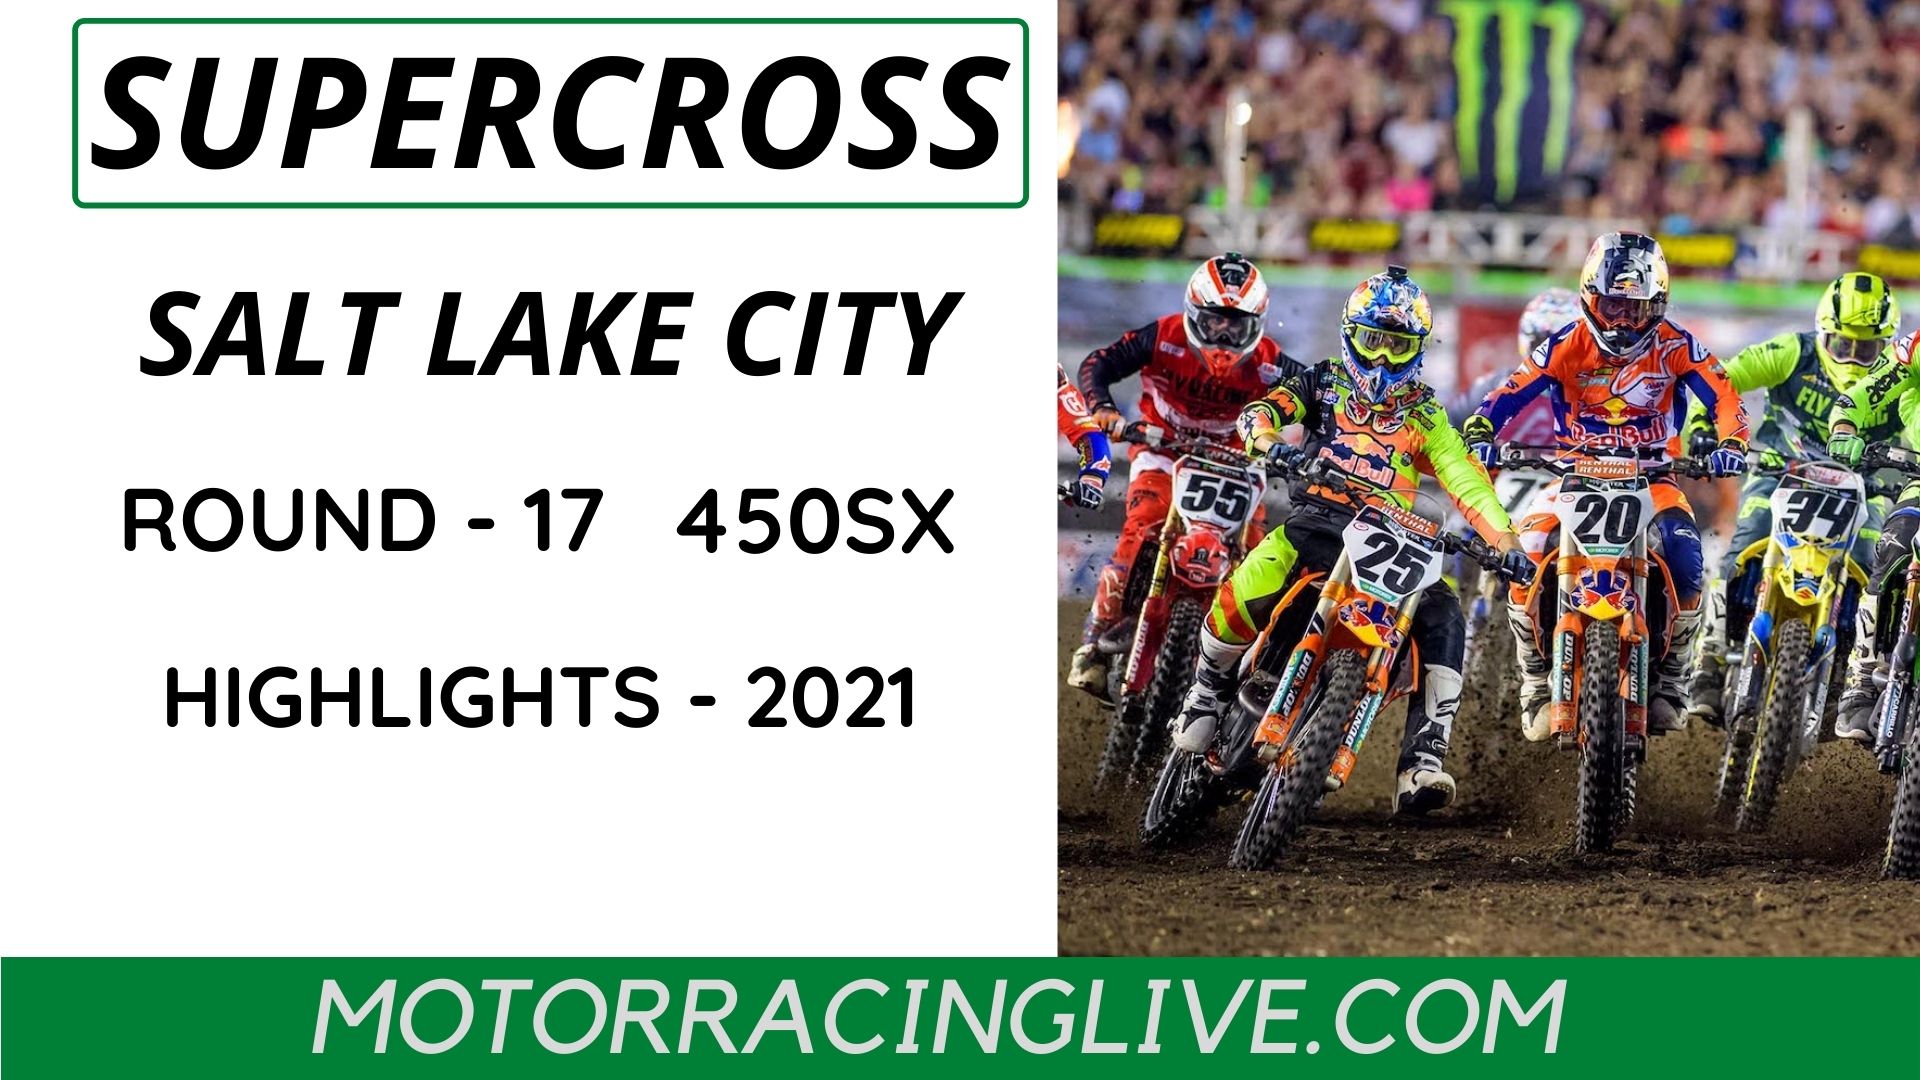 Salt Lake City Round 17 450SX Highlights 2021 Supercross